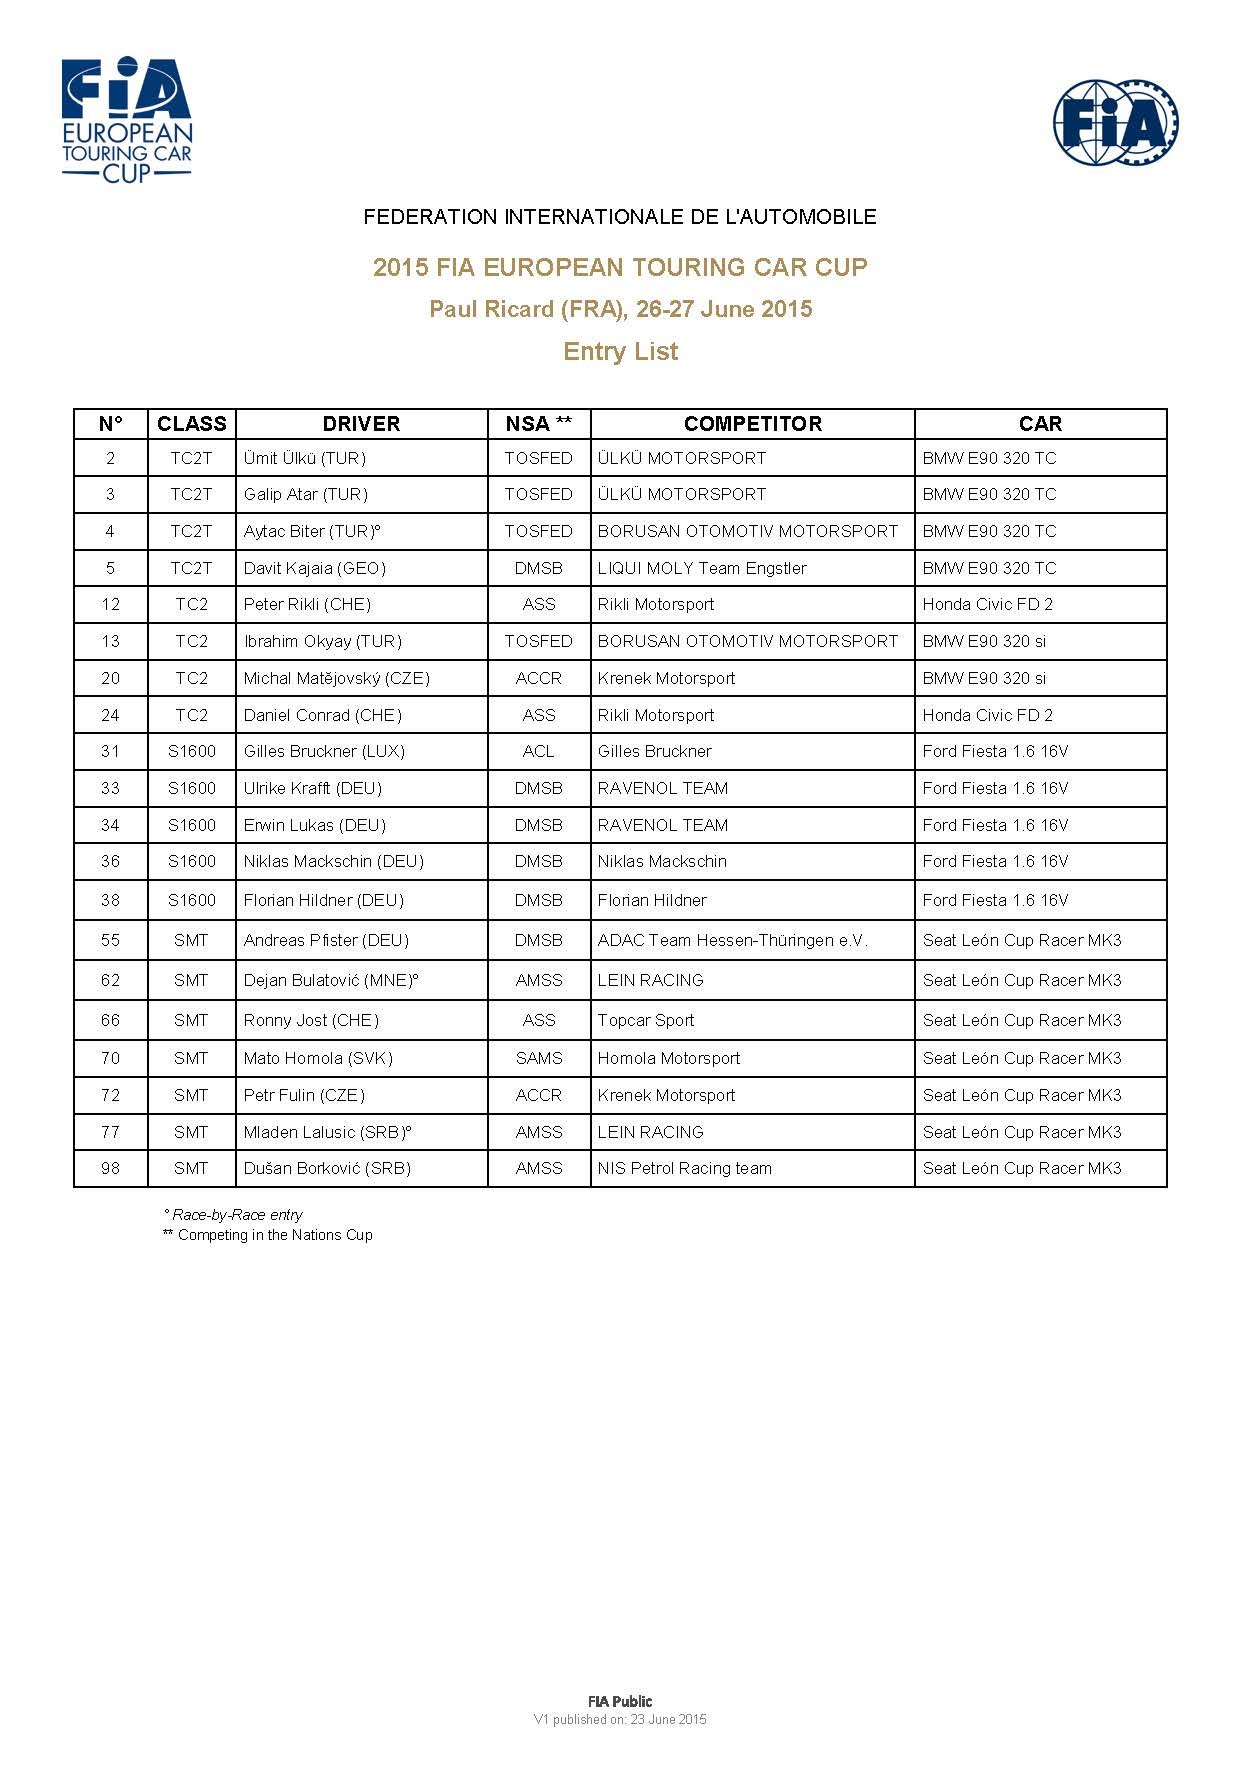 2015 FIA ETCC Paul Ricard entry list